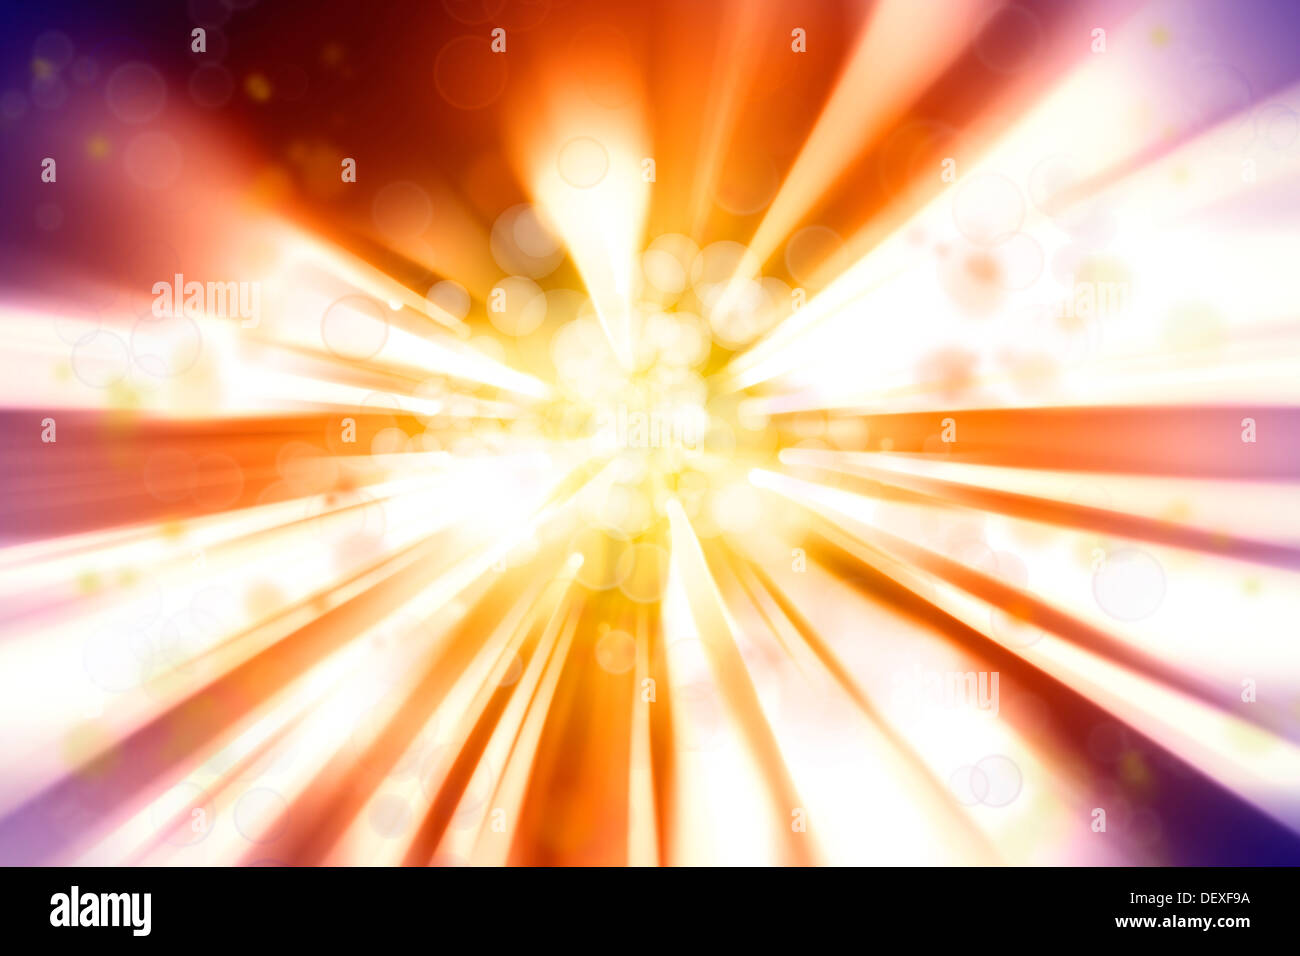 Bright blast of light background Stock Photo